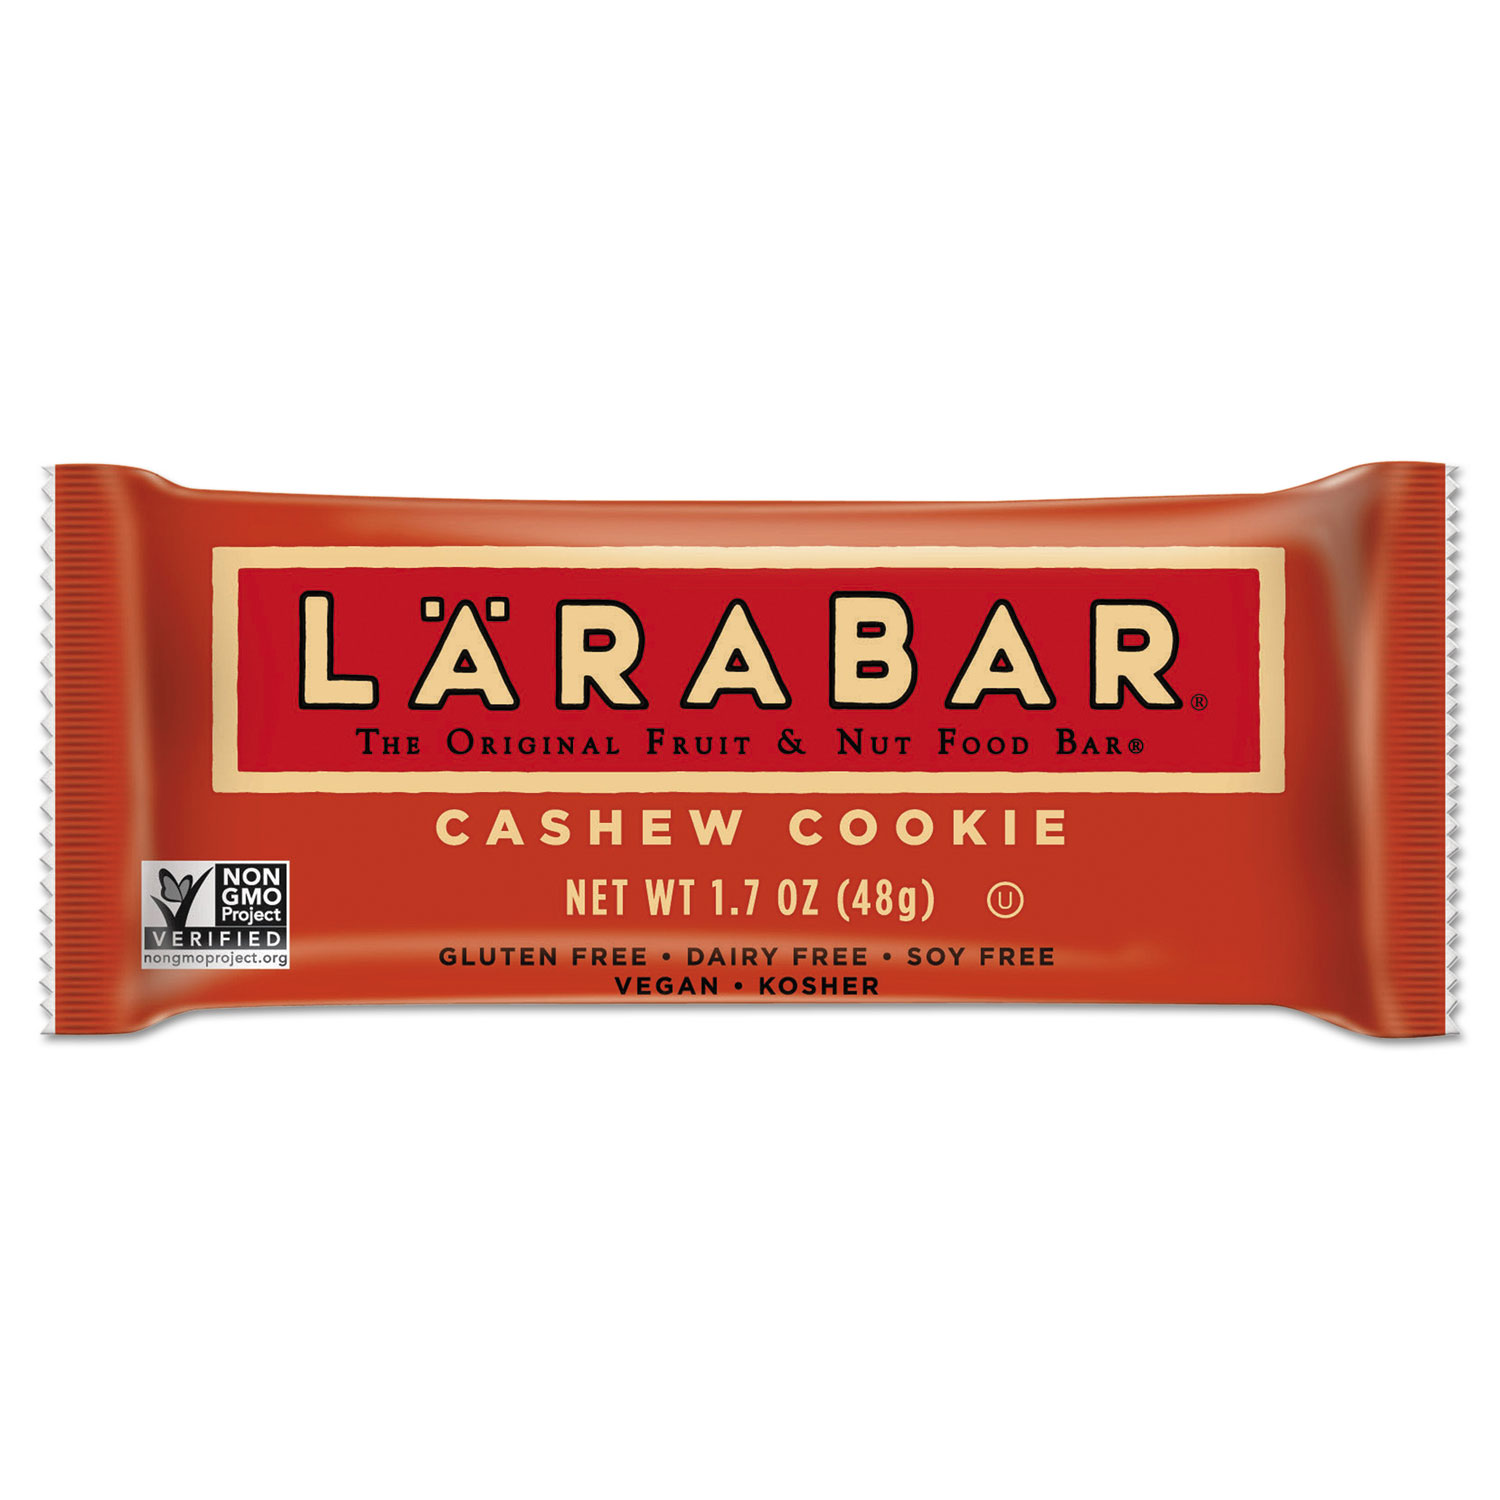 Larabar The Original Fruit and Nut Food Bar, Cashew Cookie, 1.7oz, 16/Box